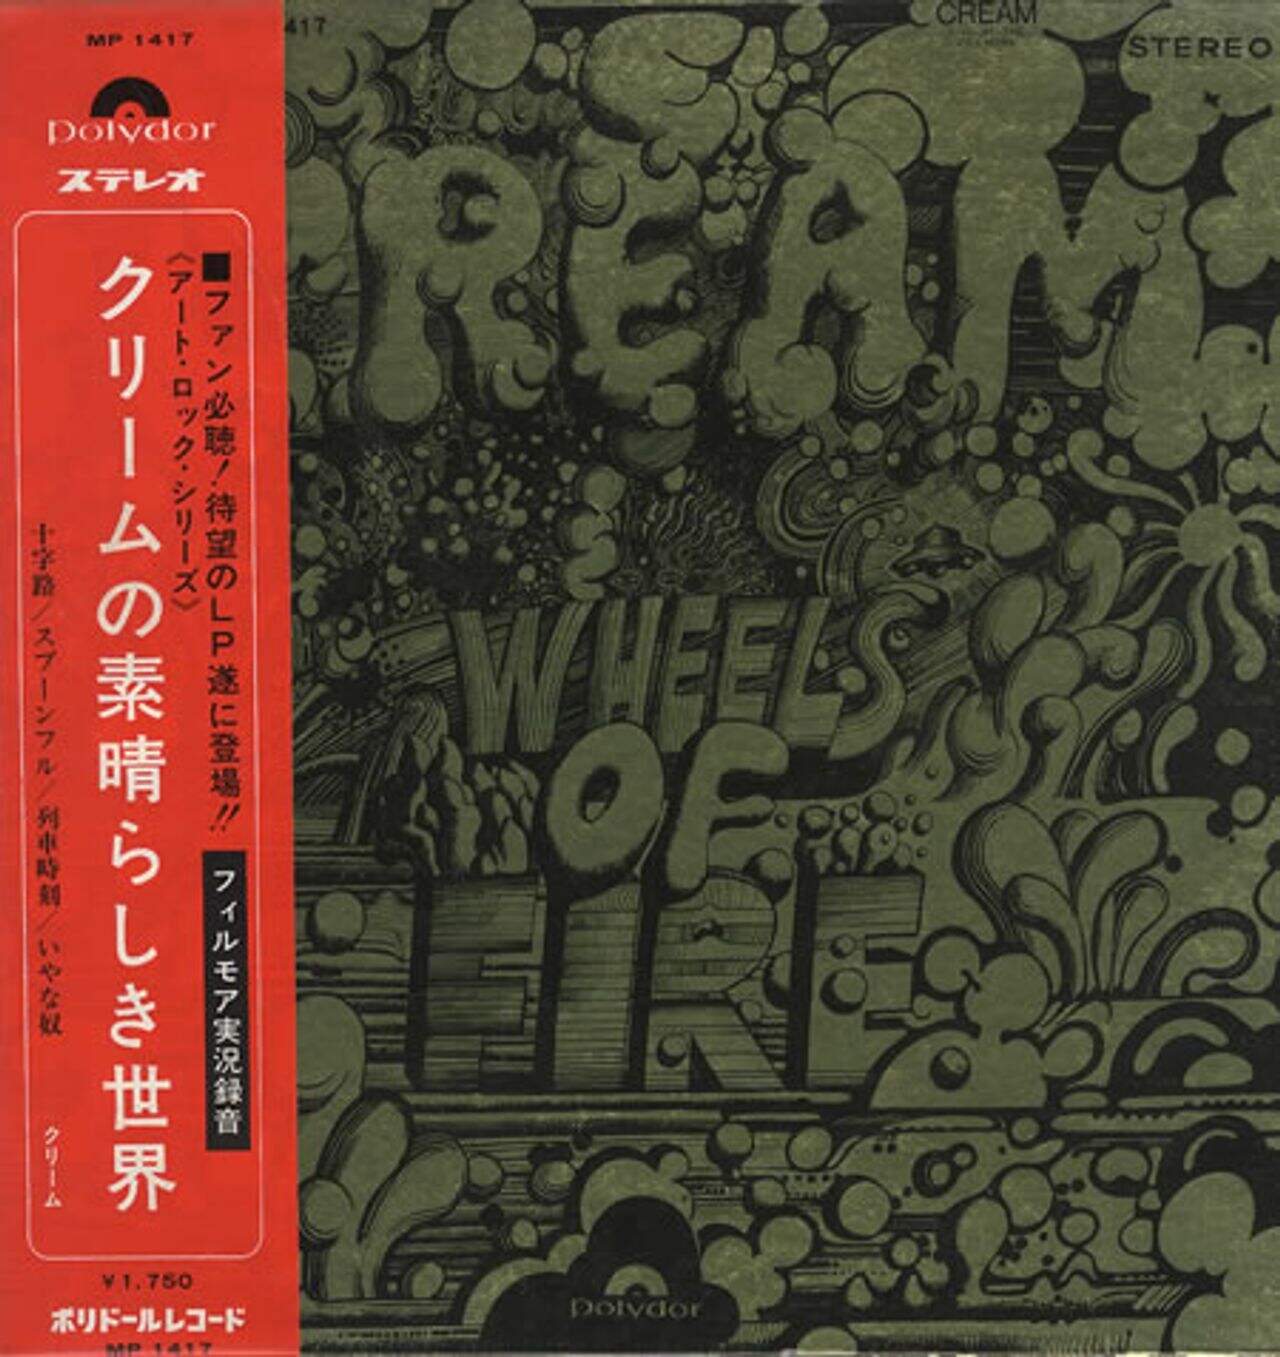 Cream Wheels Of Fire - 1st Polydor Issue Japanese Vinyl LP